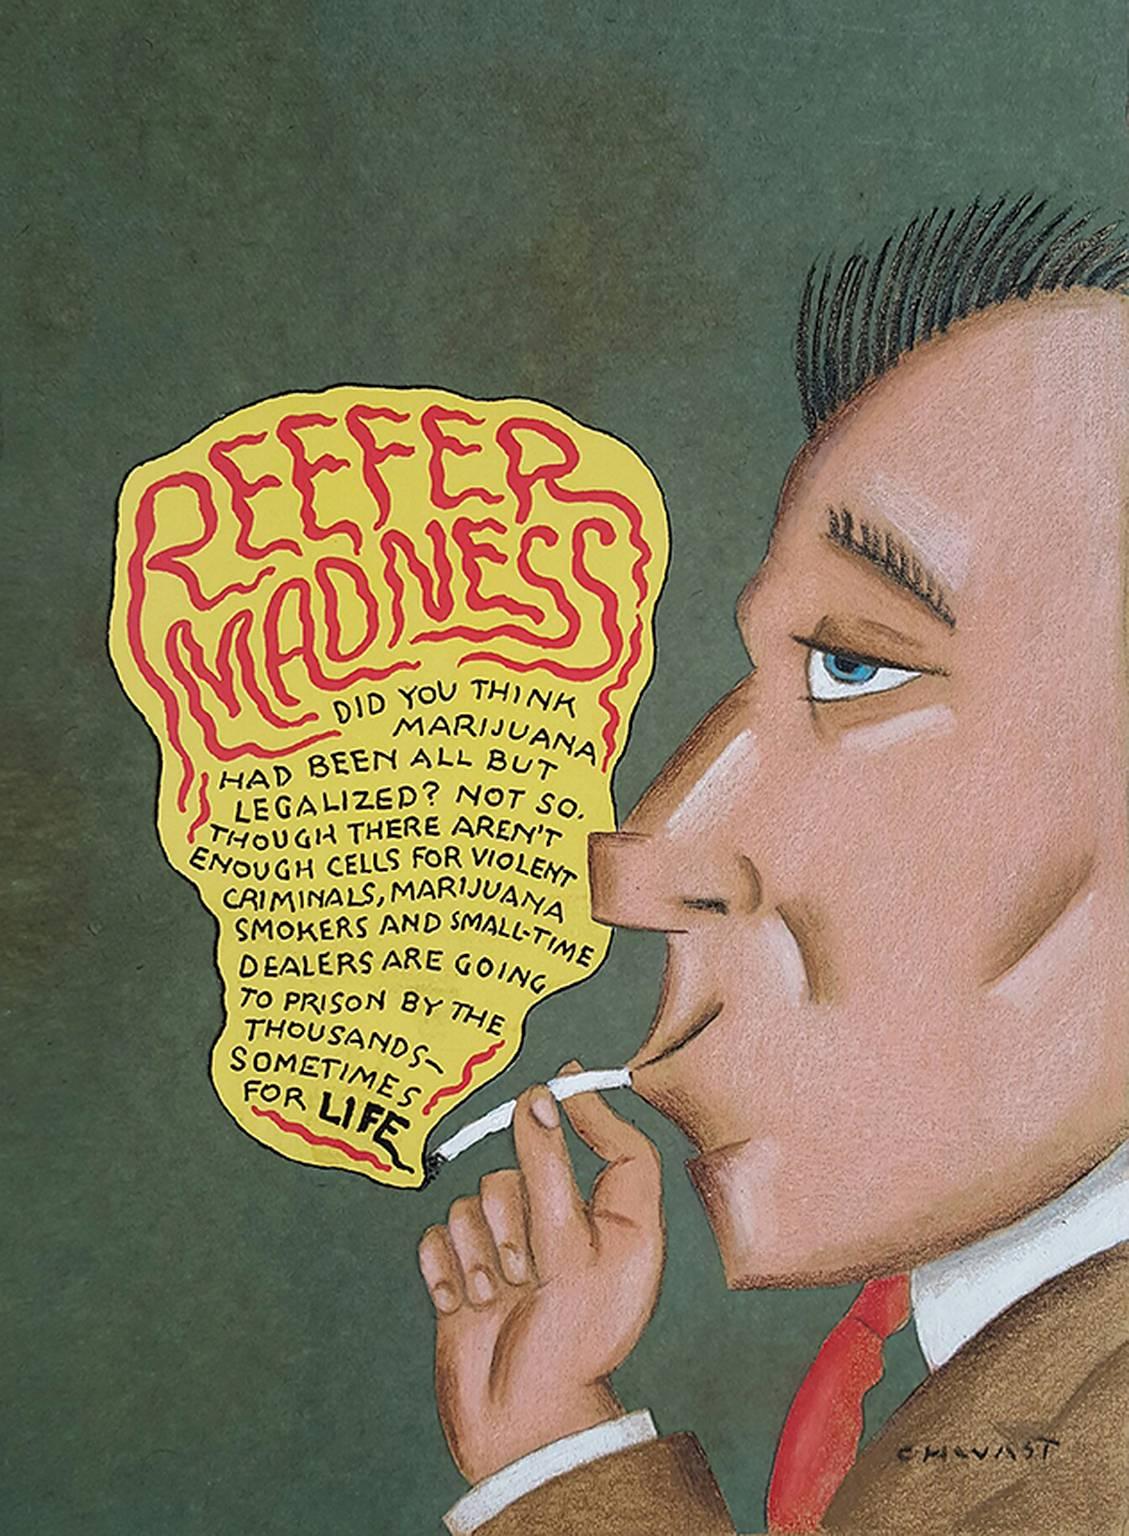 Reefer Madness, Marajuana  - Pot  - Cannabis - Cover Atlantic Monthly Magazine